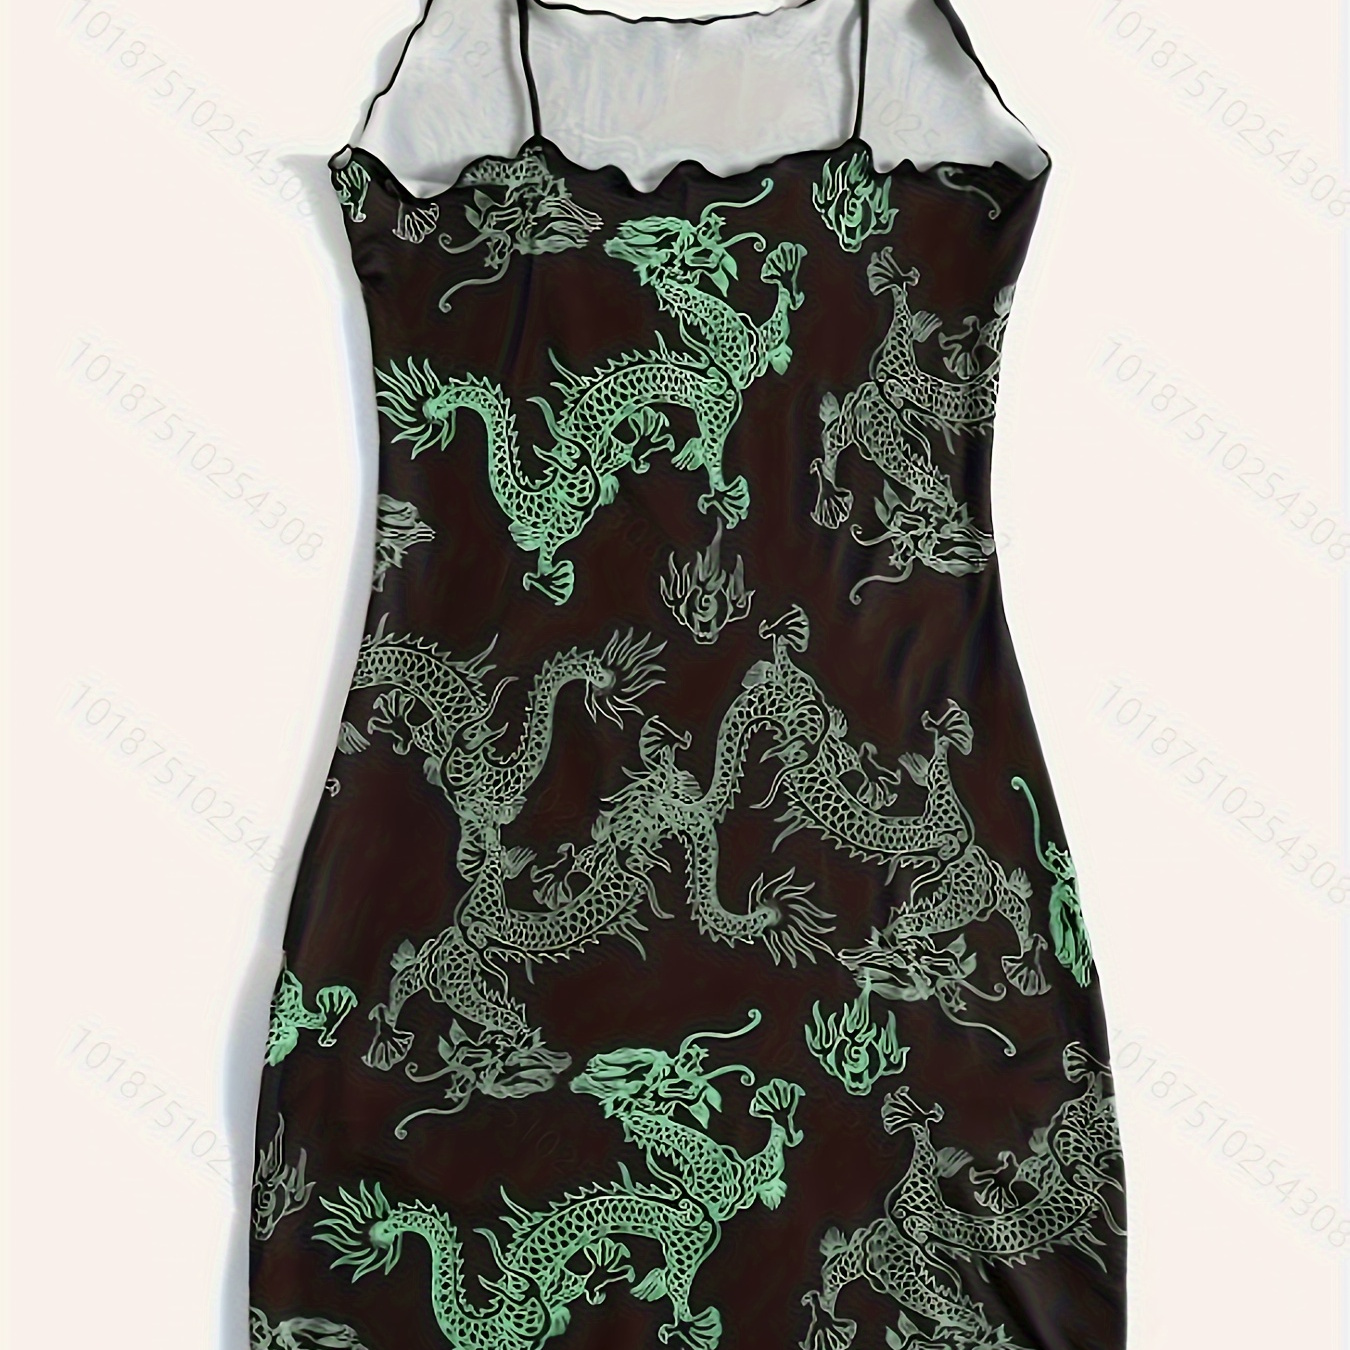 

Dragon Print Spaghetti Strap Dress, Casual Lettuce Trim Sleeveless Cami Dress For Spring & Summer, Women's Clothing